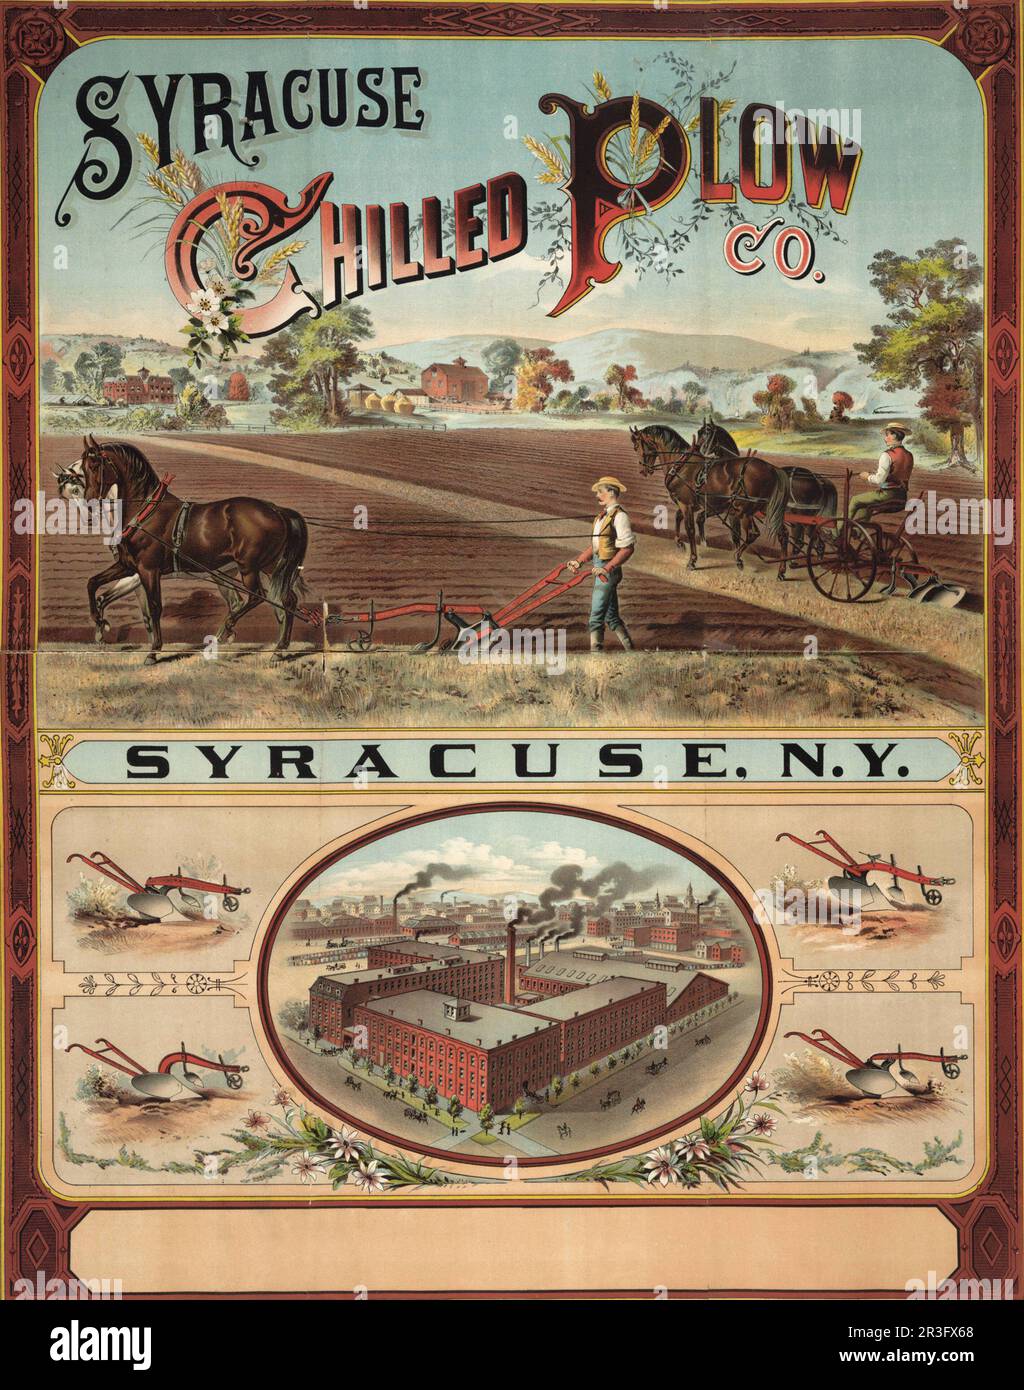 Vintage-Werbung für Syracuse Chilled Plow Company. Stockfoto